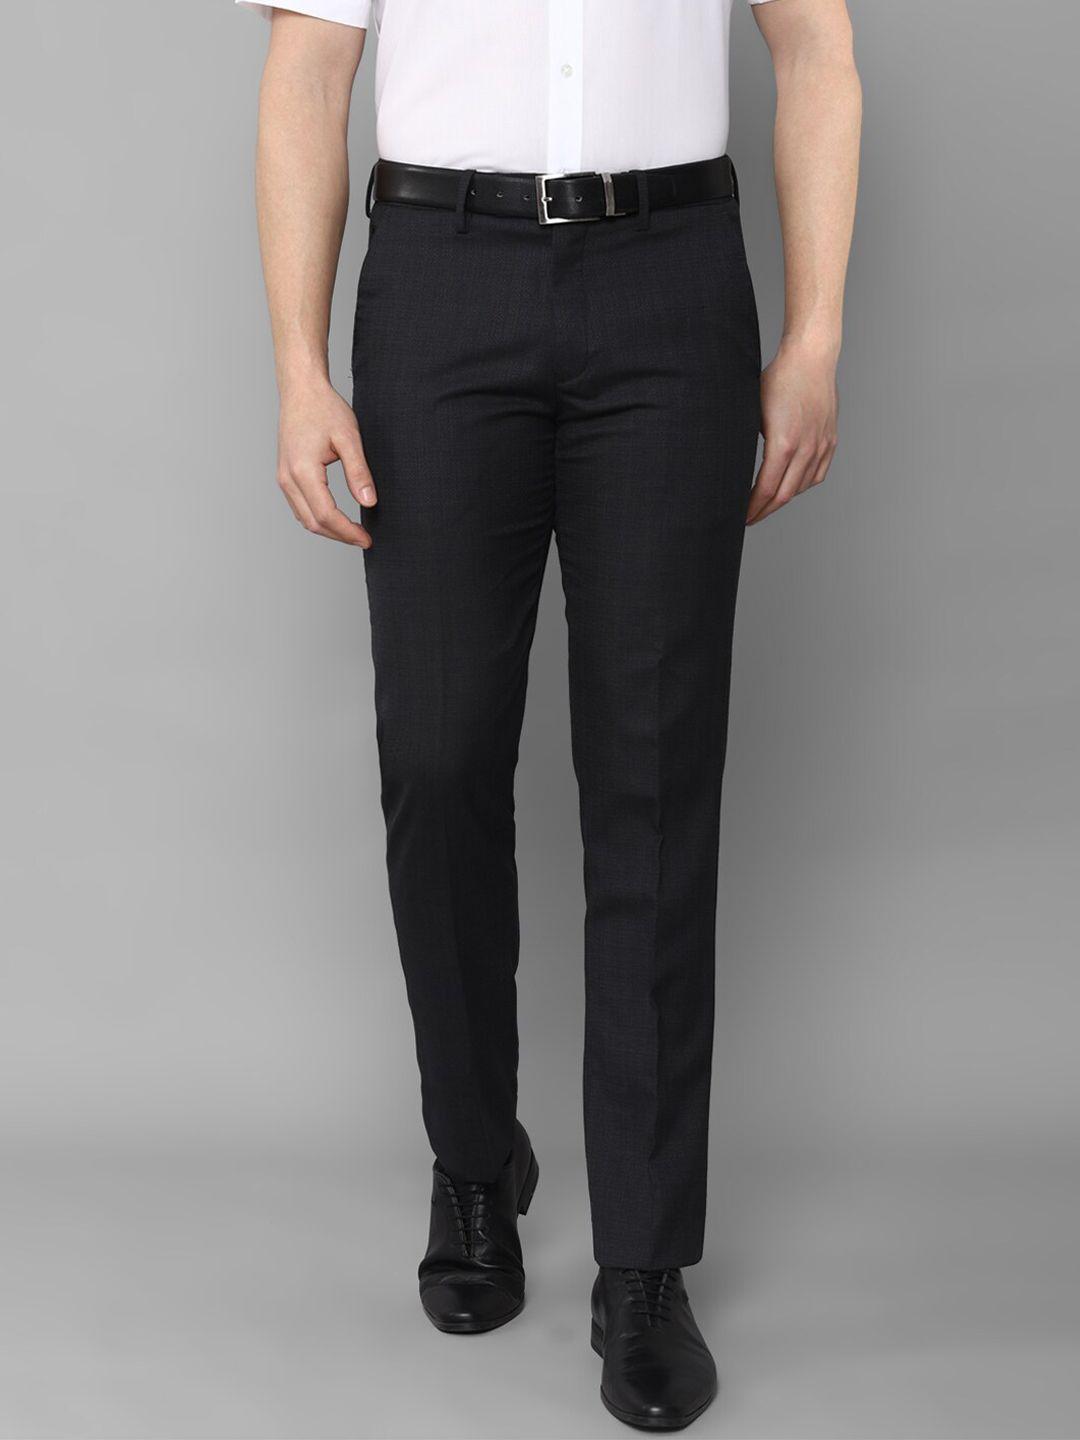 louis philippe men black slim fit formal trousers